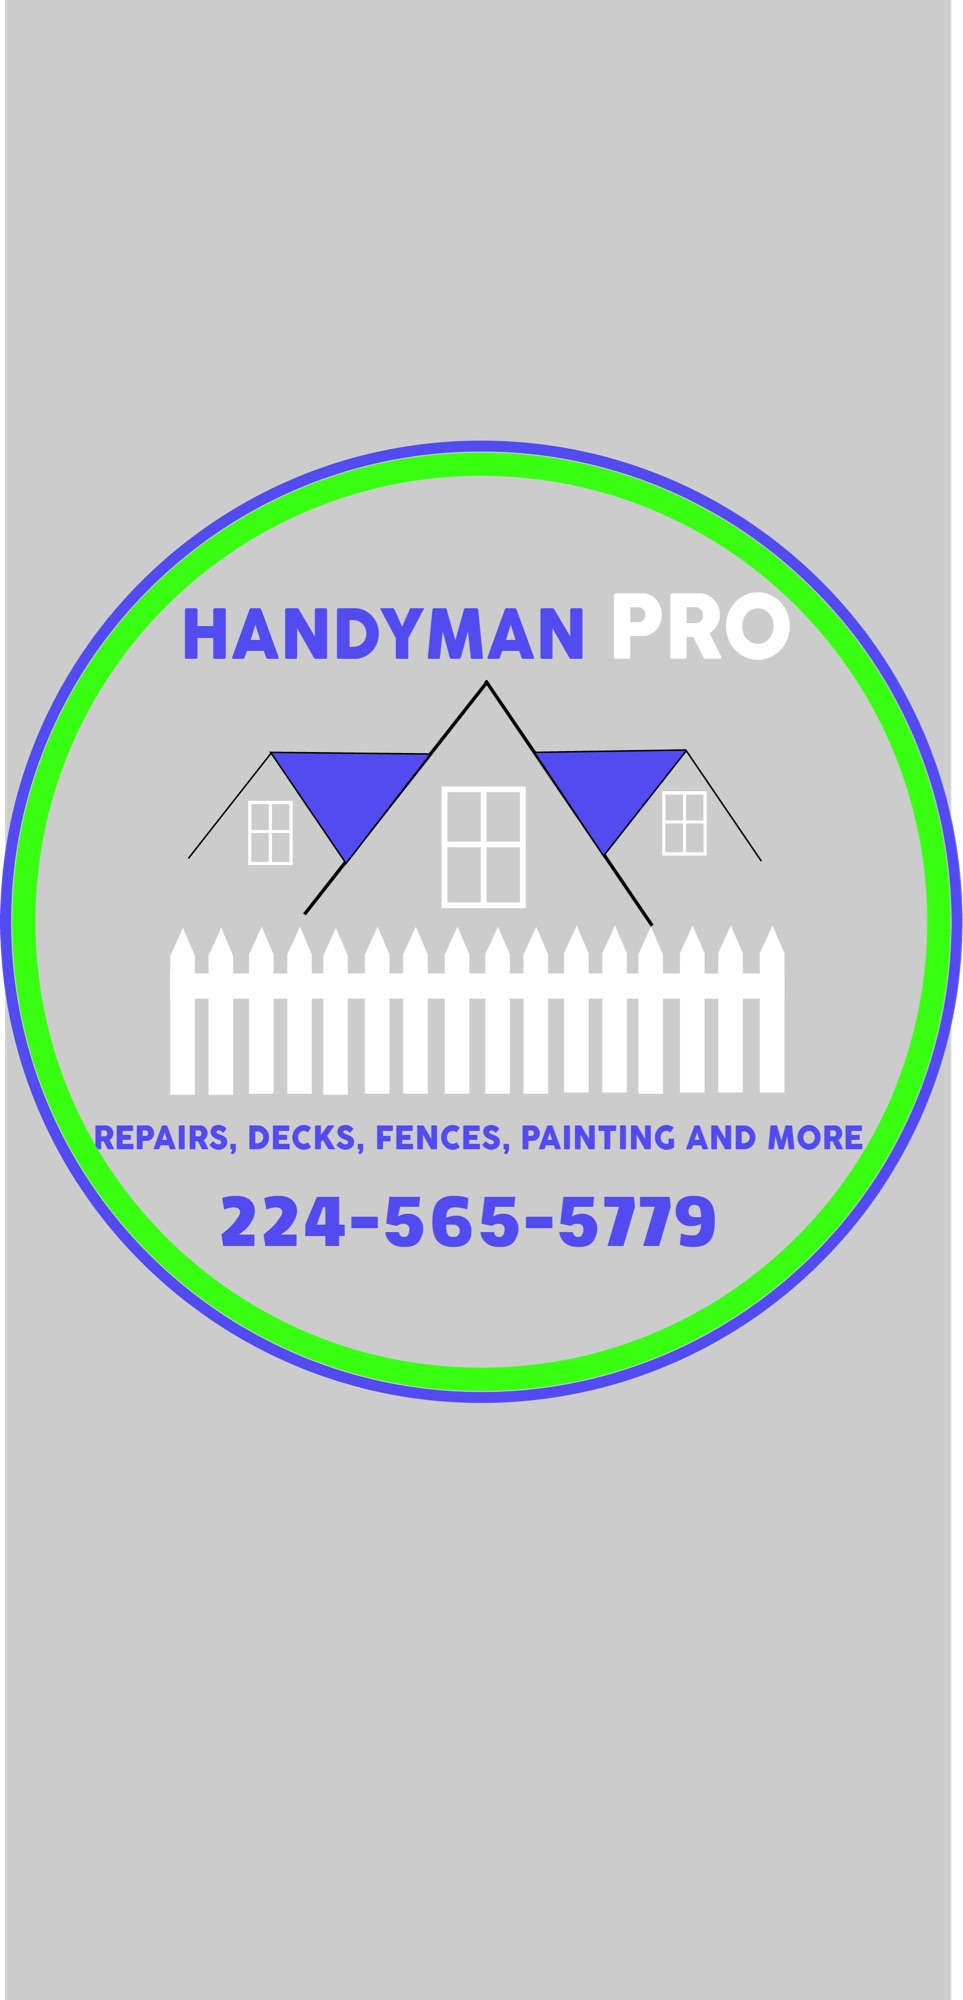 Handyman Pro Logo